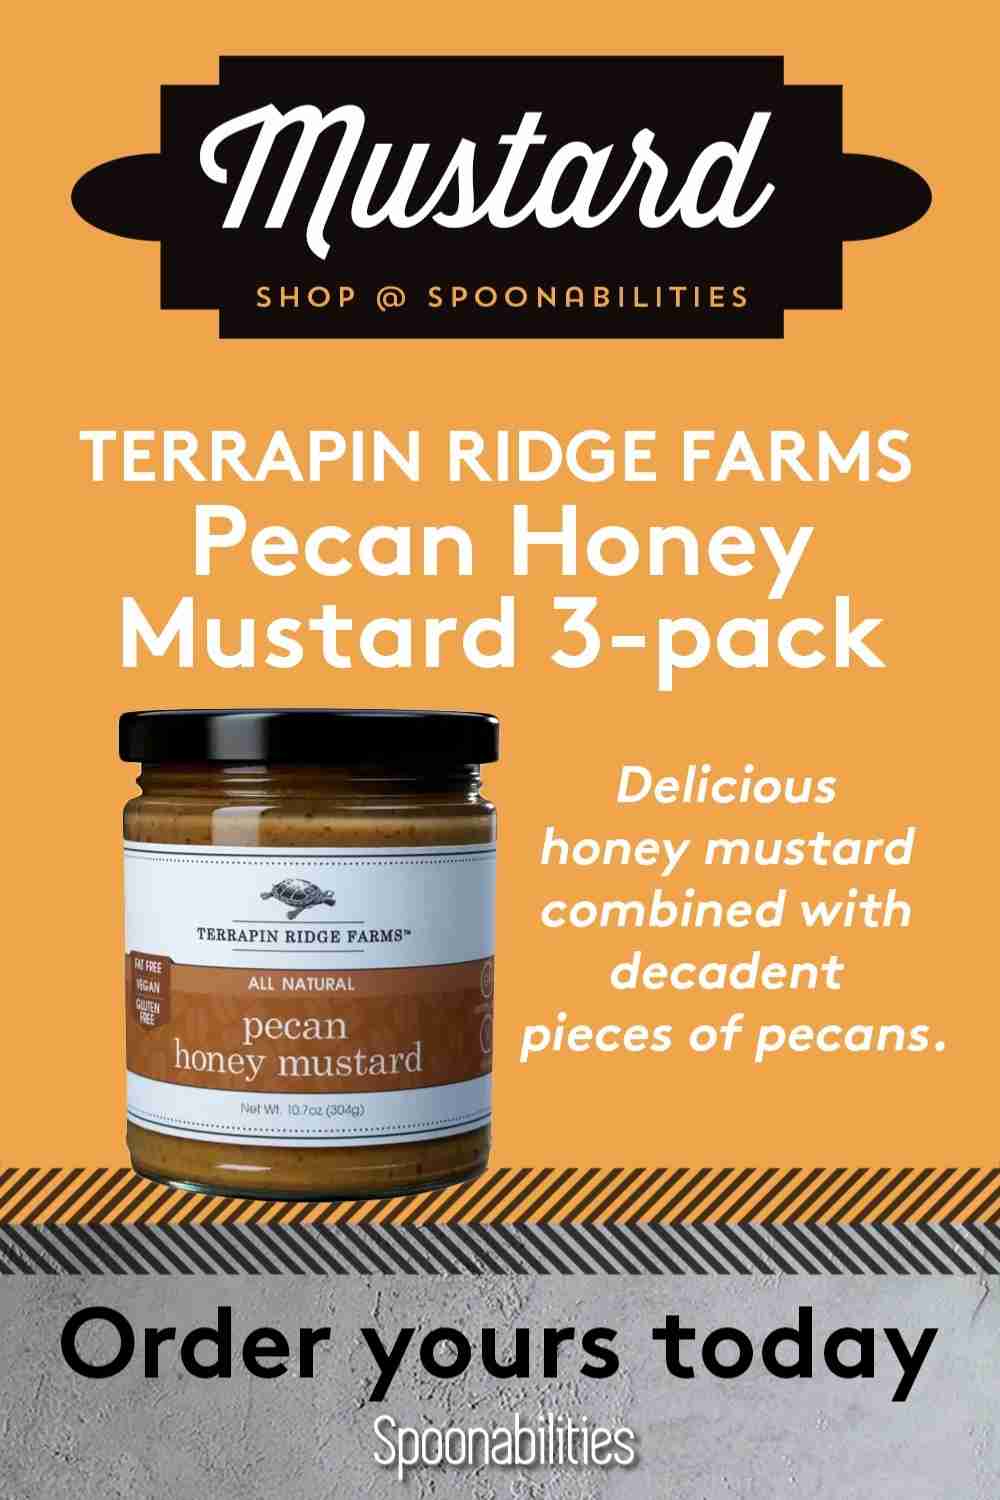 Pecan Honey Mustard 3-pack